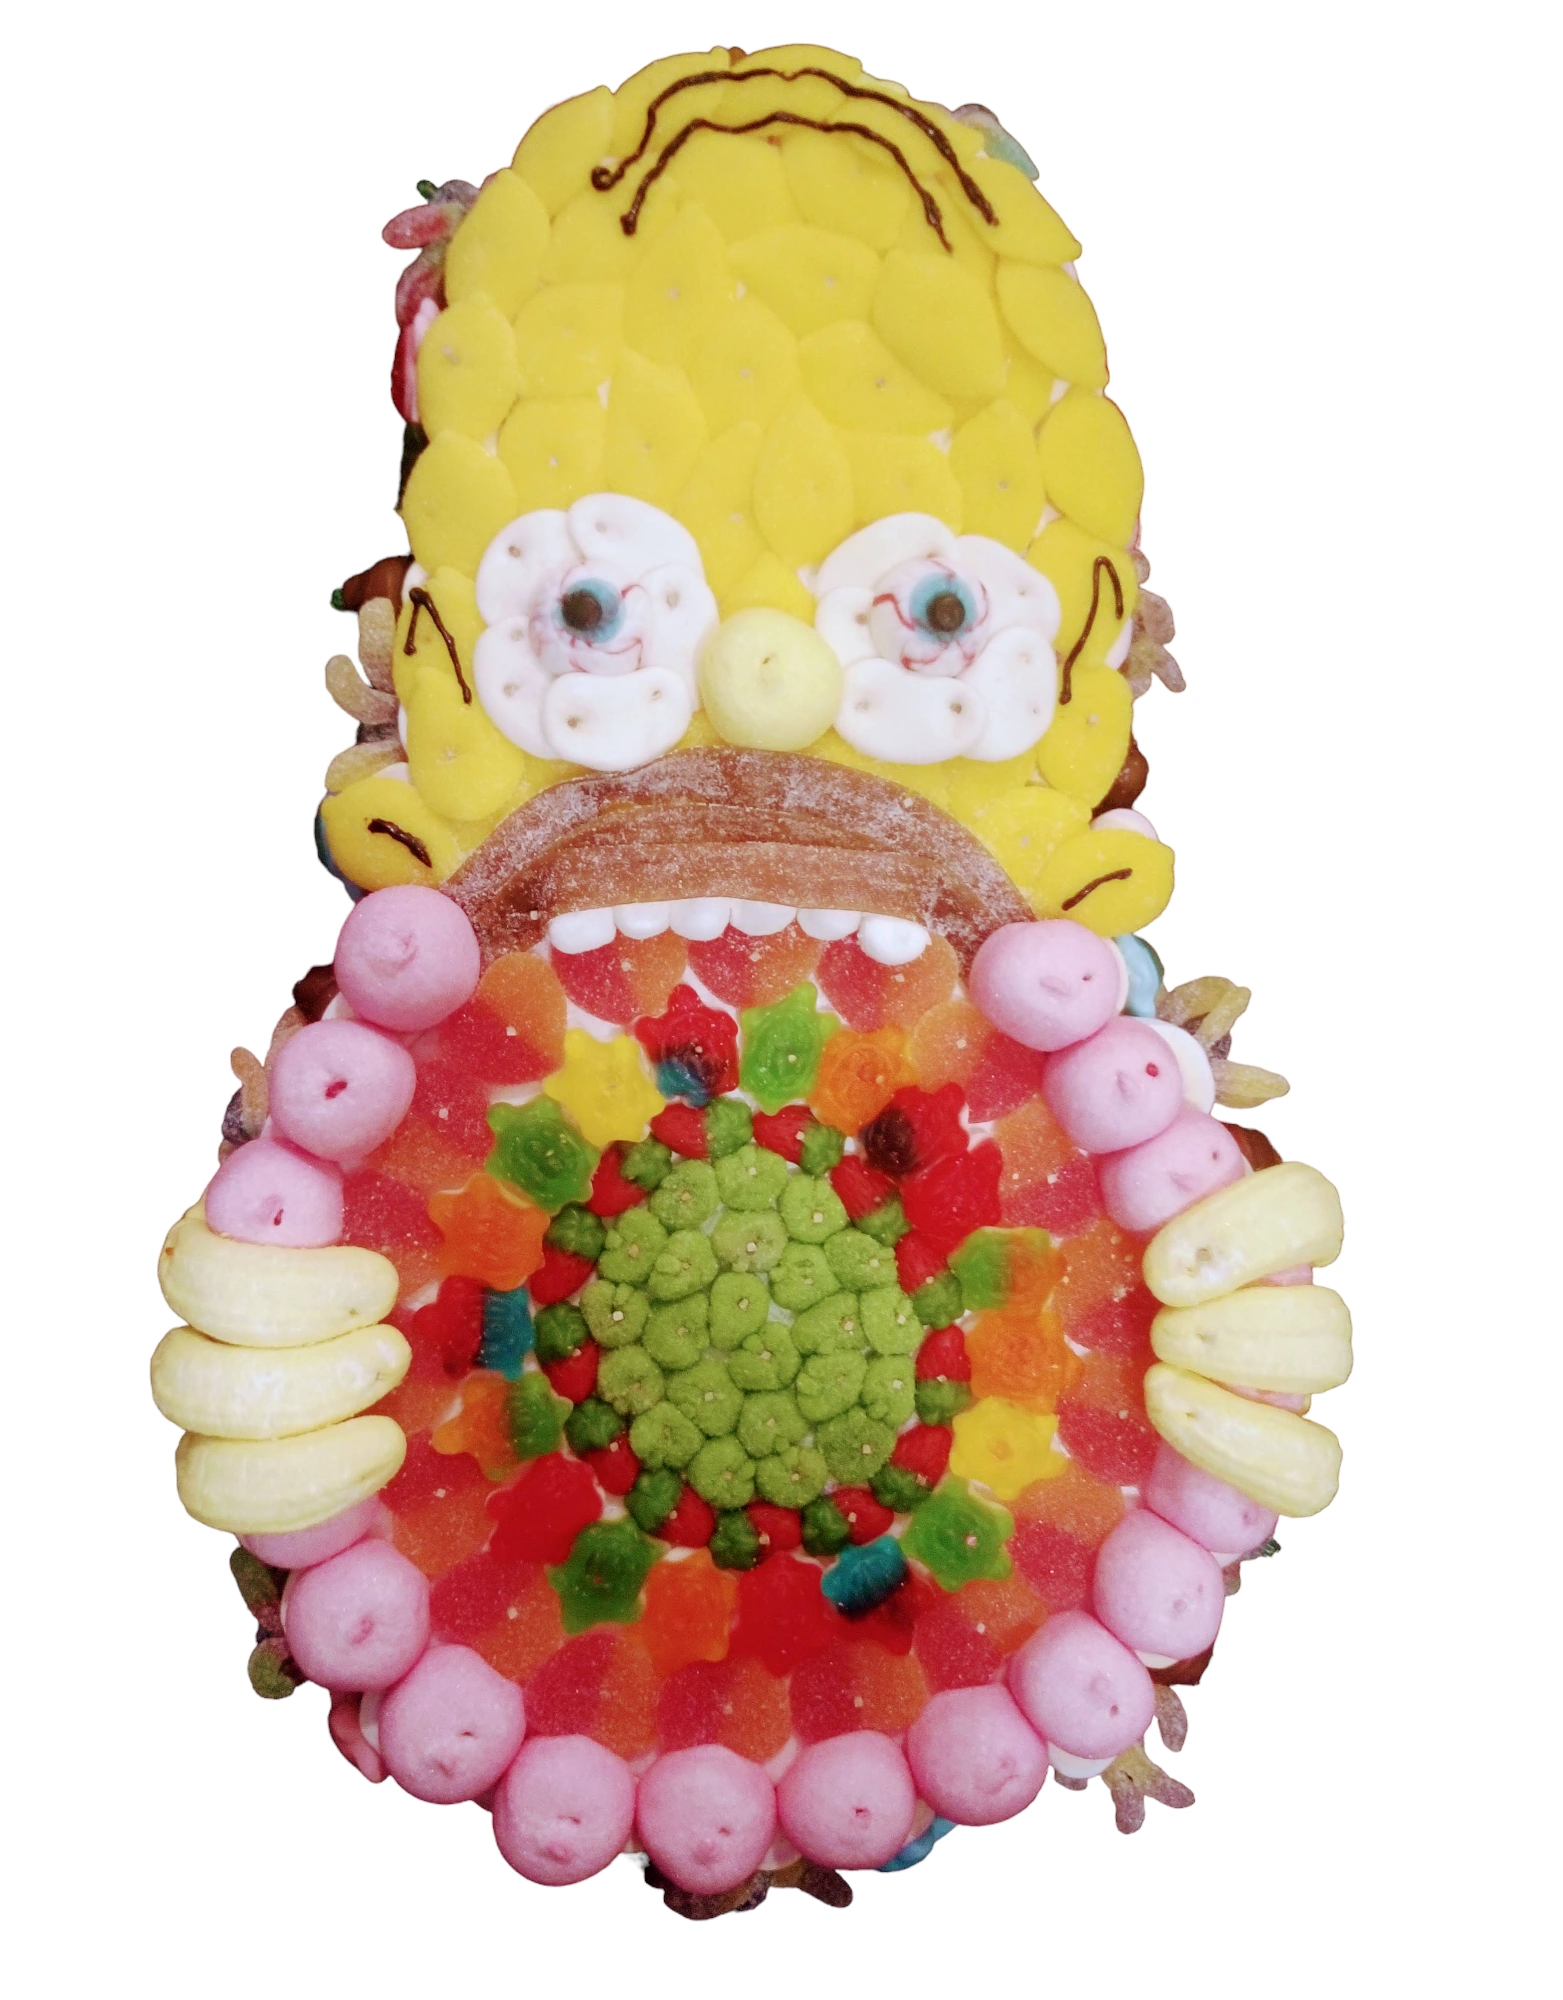 Tarta de chuches original con la cara de Homer Simpson